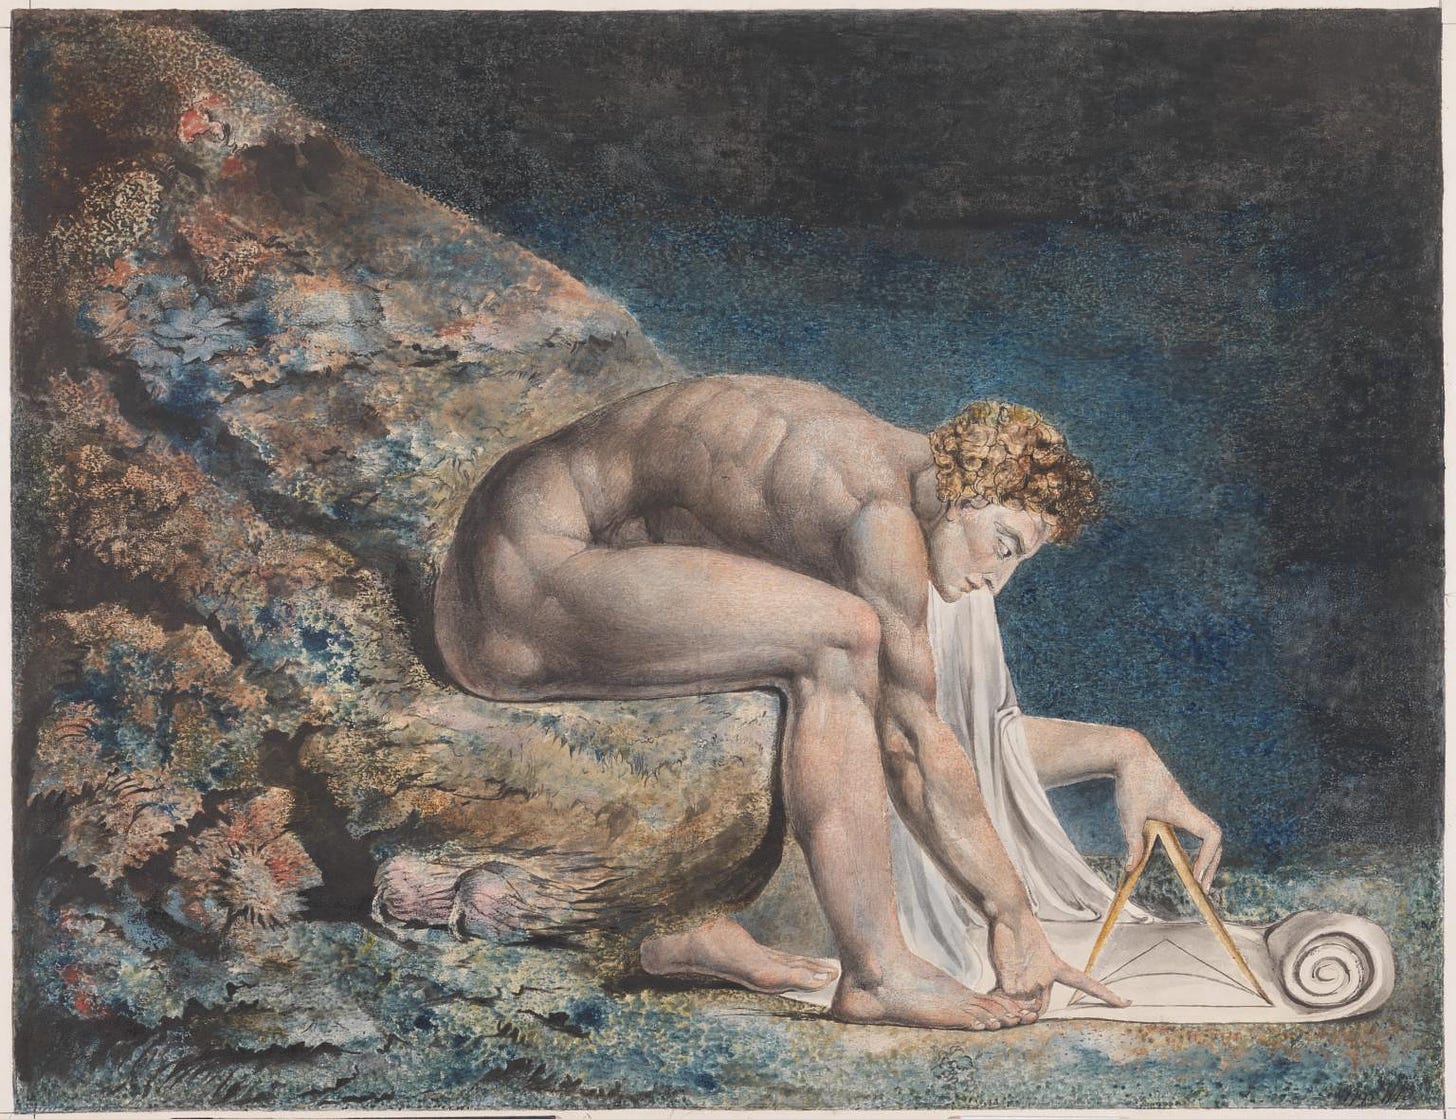  "May God us keep From Single vision & Newton's sleep" — William Blake